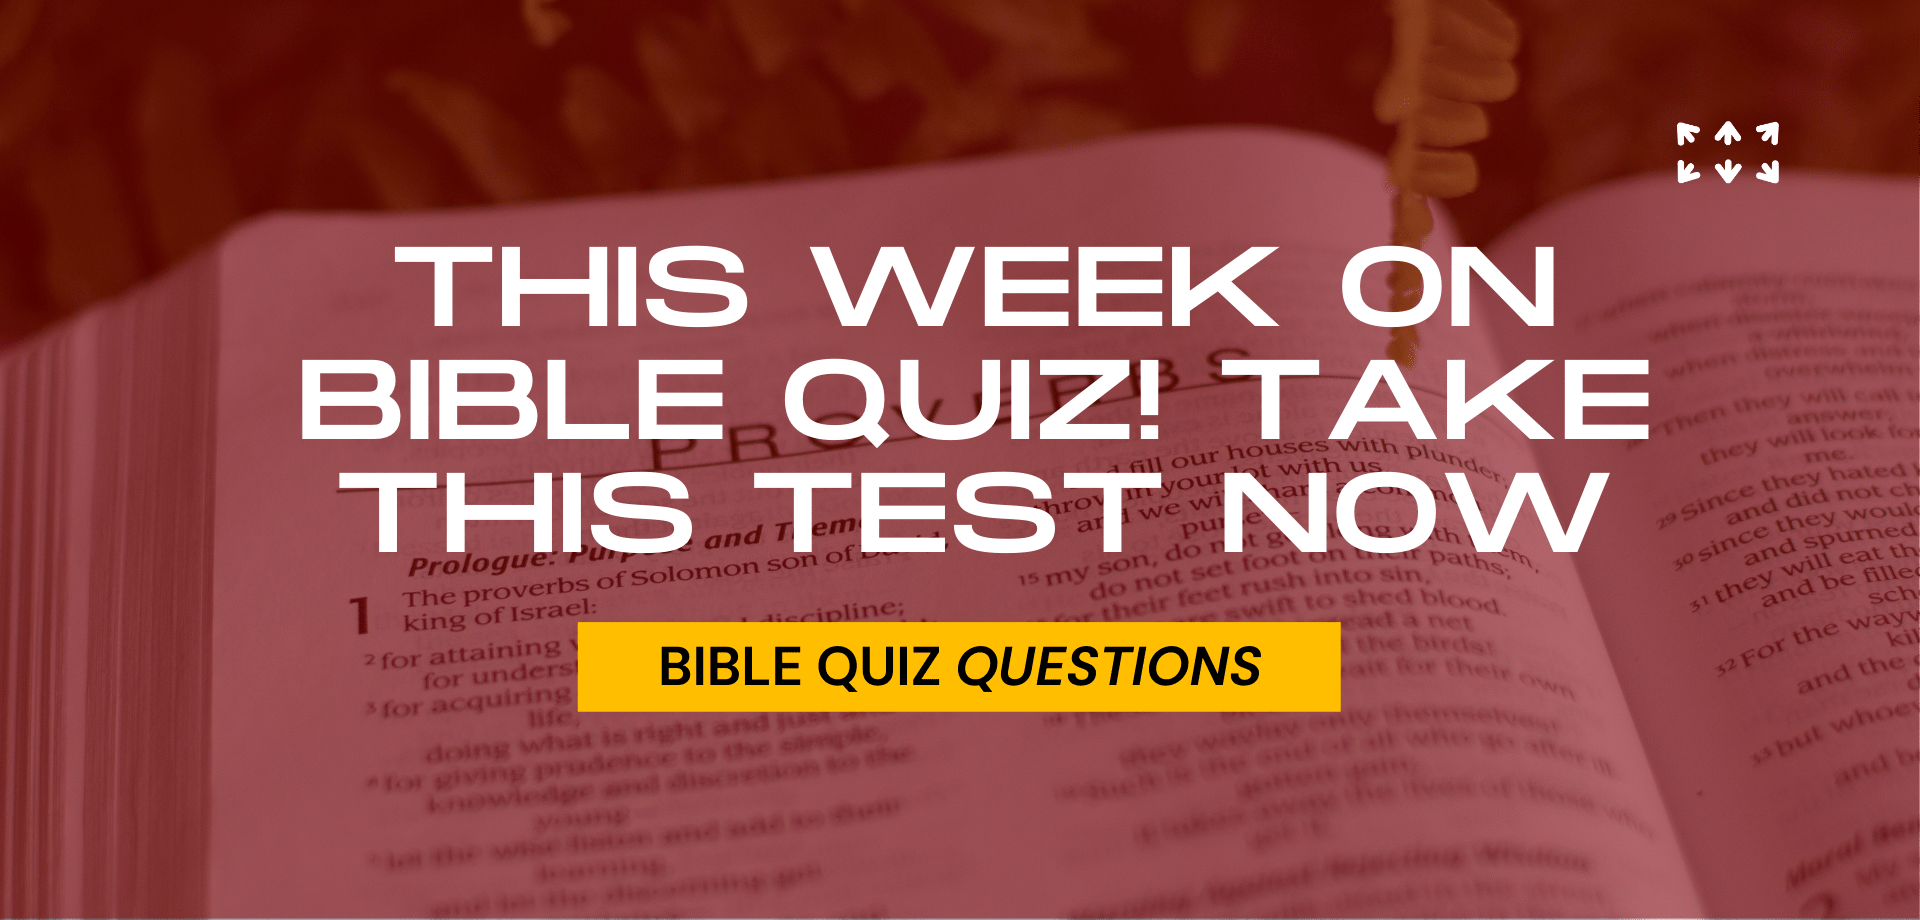 Weekly Bible quiz